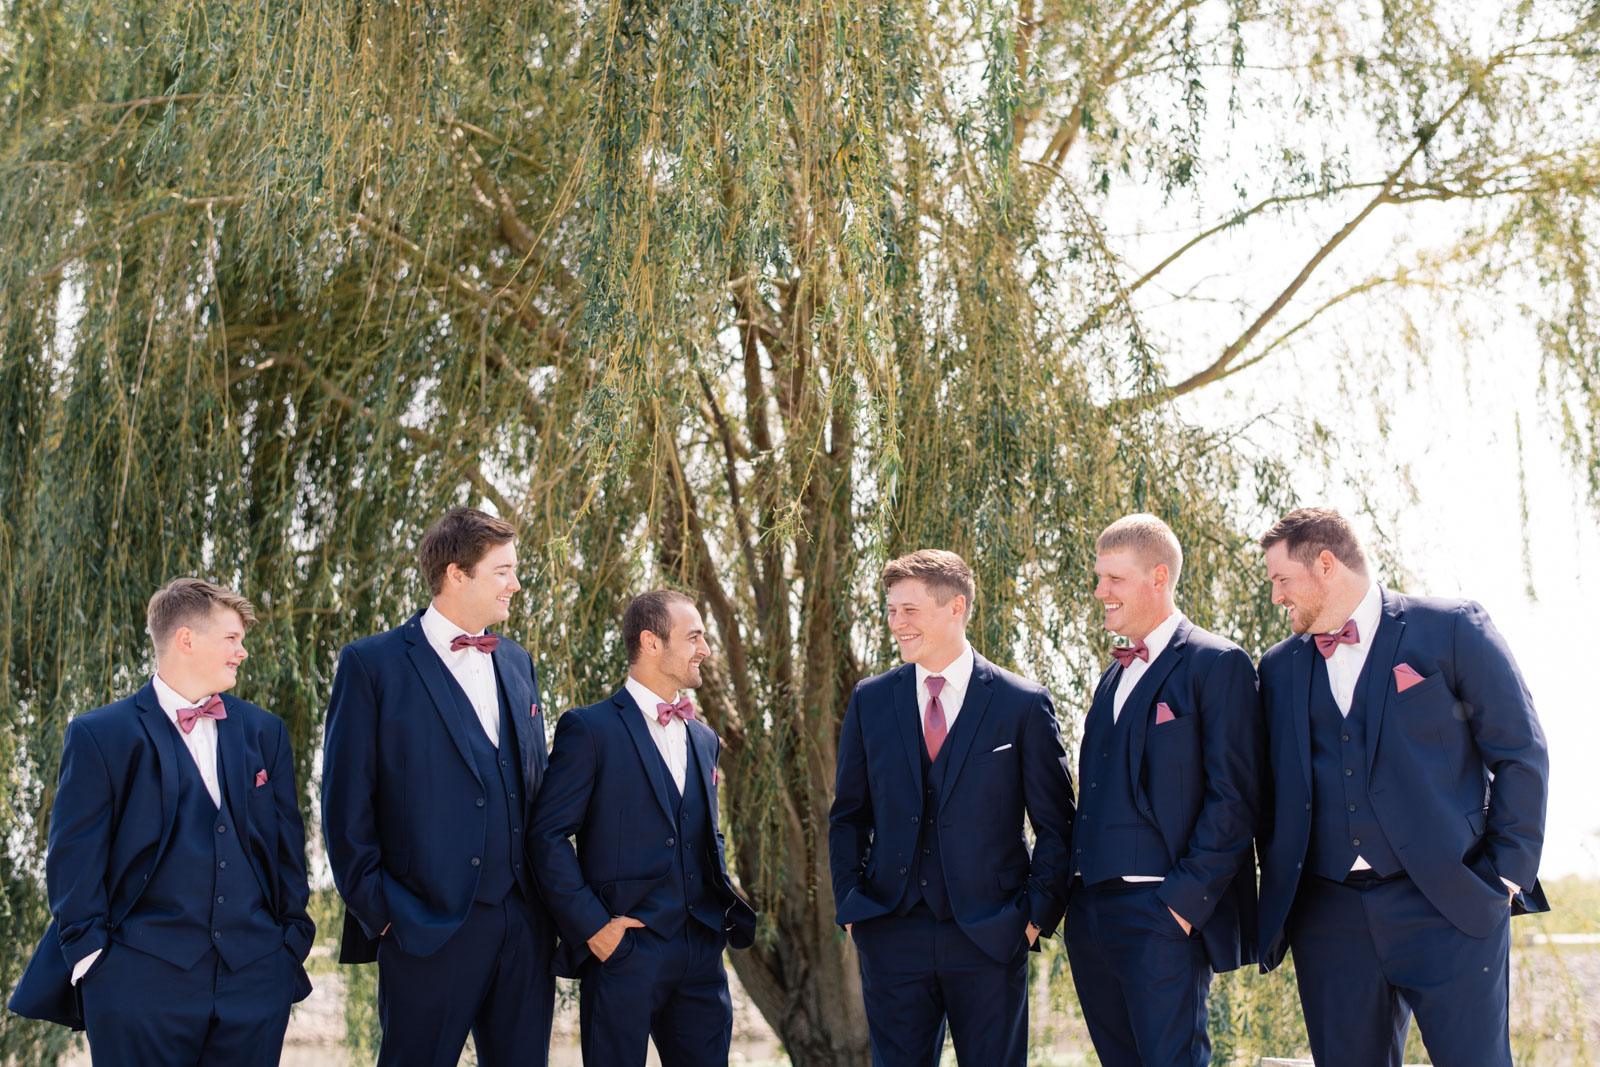 groomsmen in navy suits epic event center wedding venue